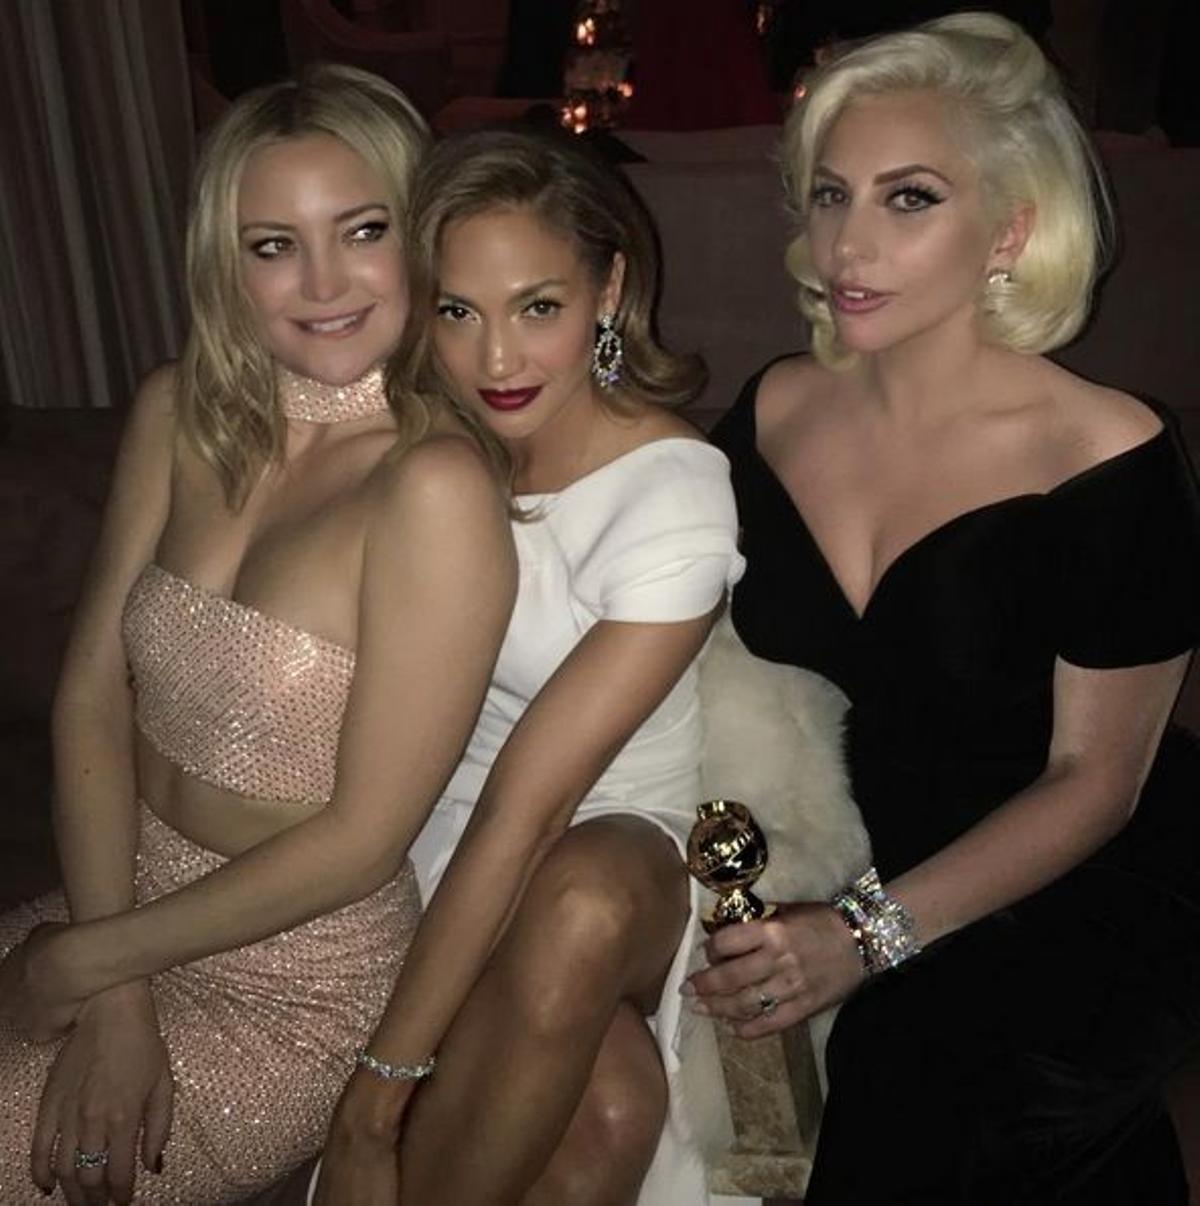 #GlobosdeOro en Instagram, Kate Hudson, Jennifer Lopez y Lady Gaga